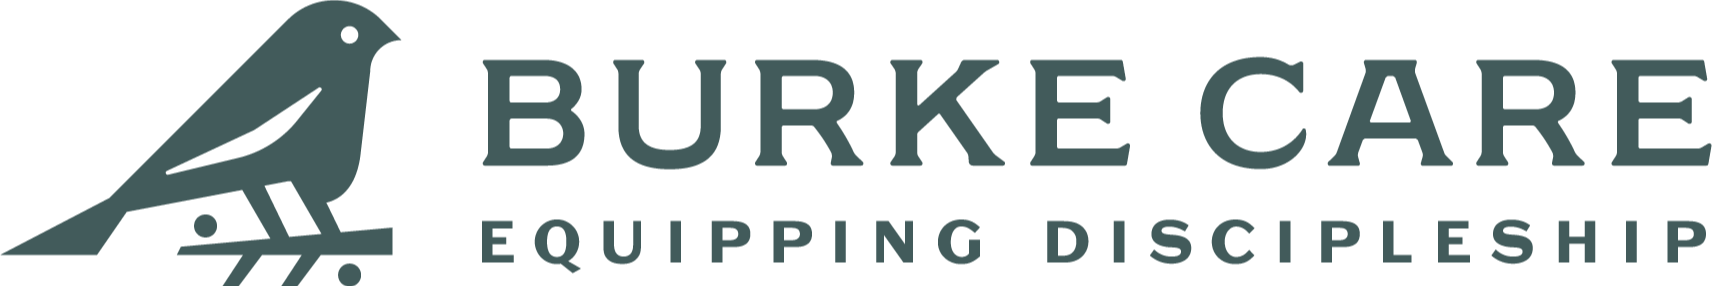 Burke Care logo